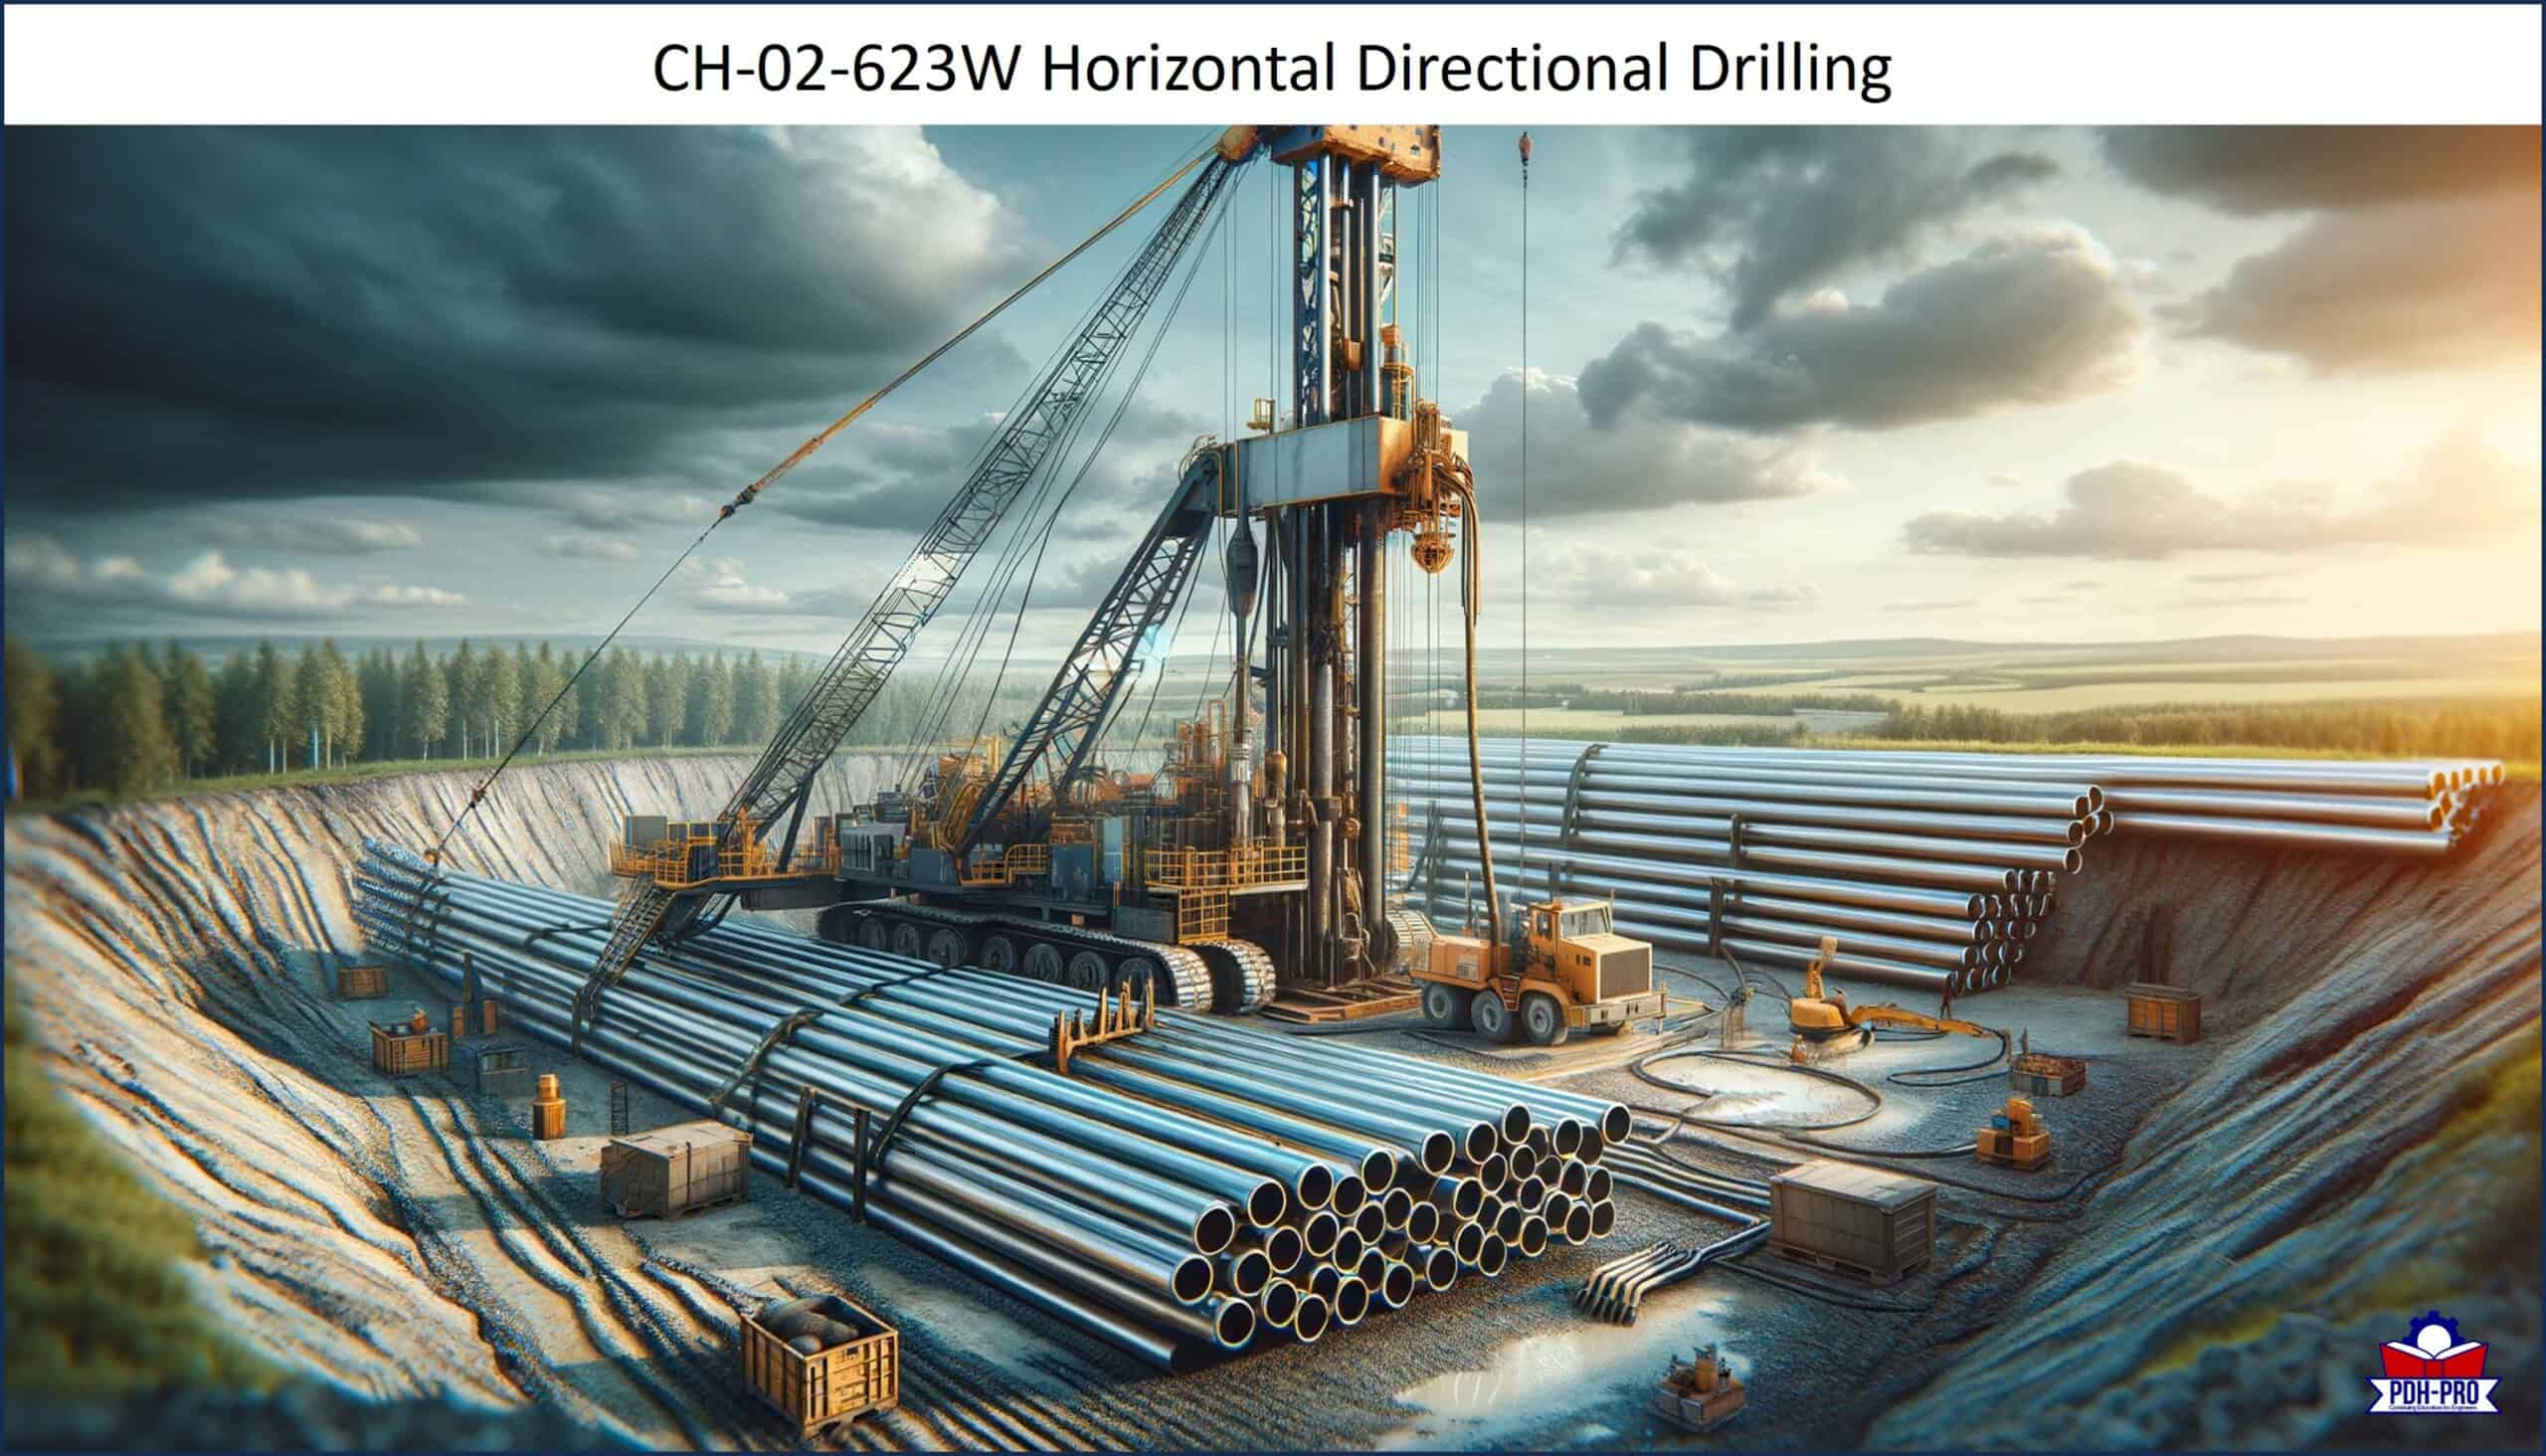 Horizontal Directional Drilling